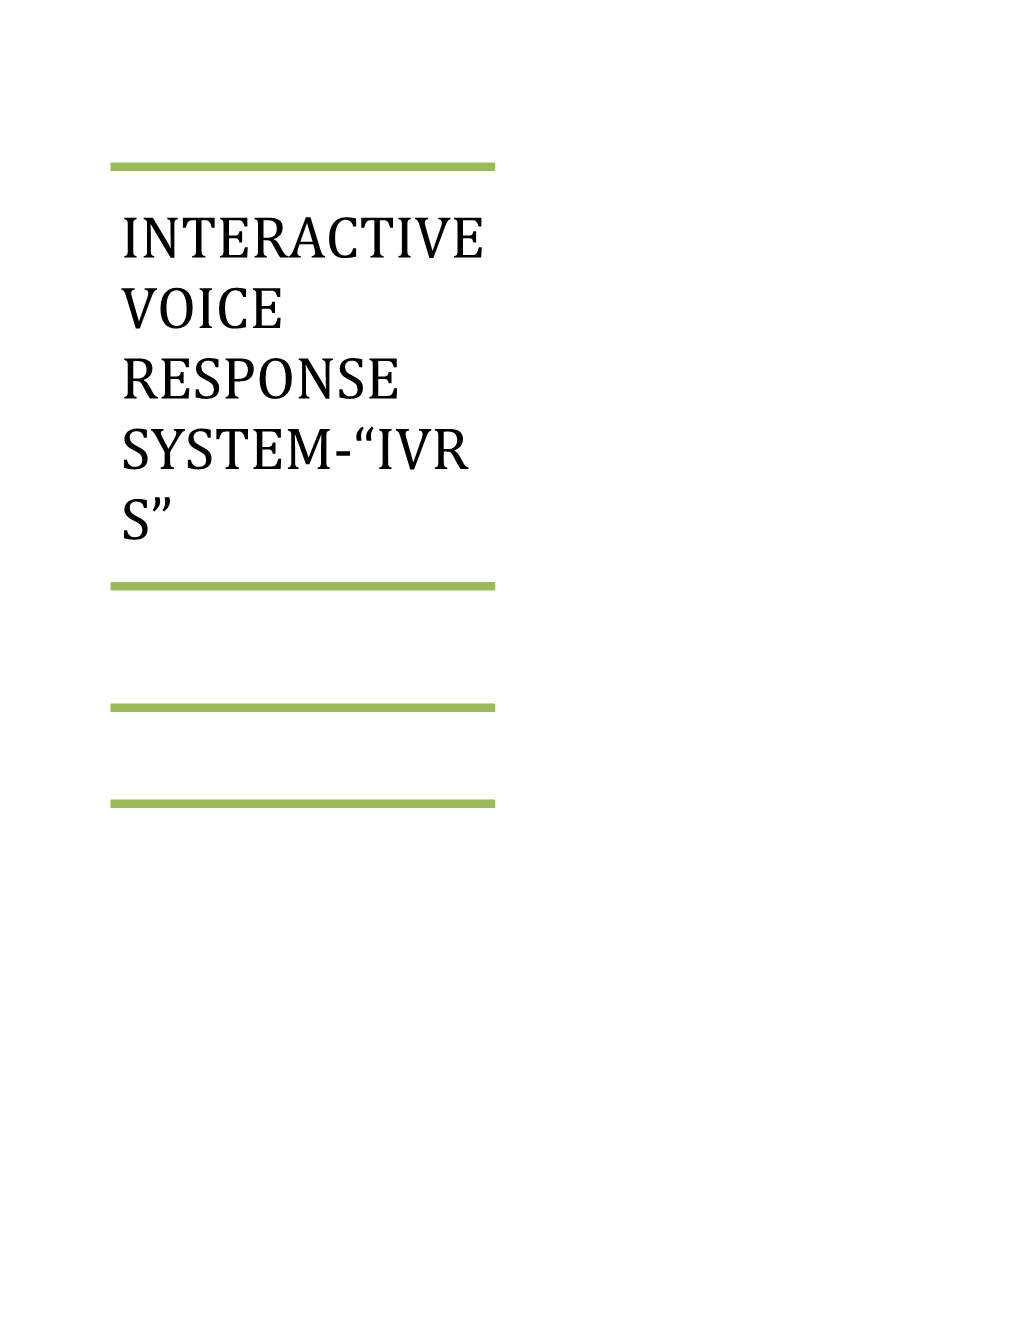 Interactive Voice Response System- Ivrs